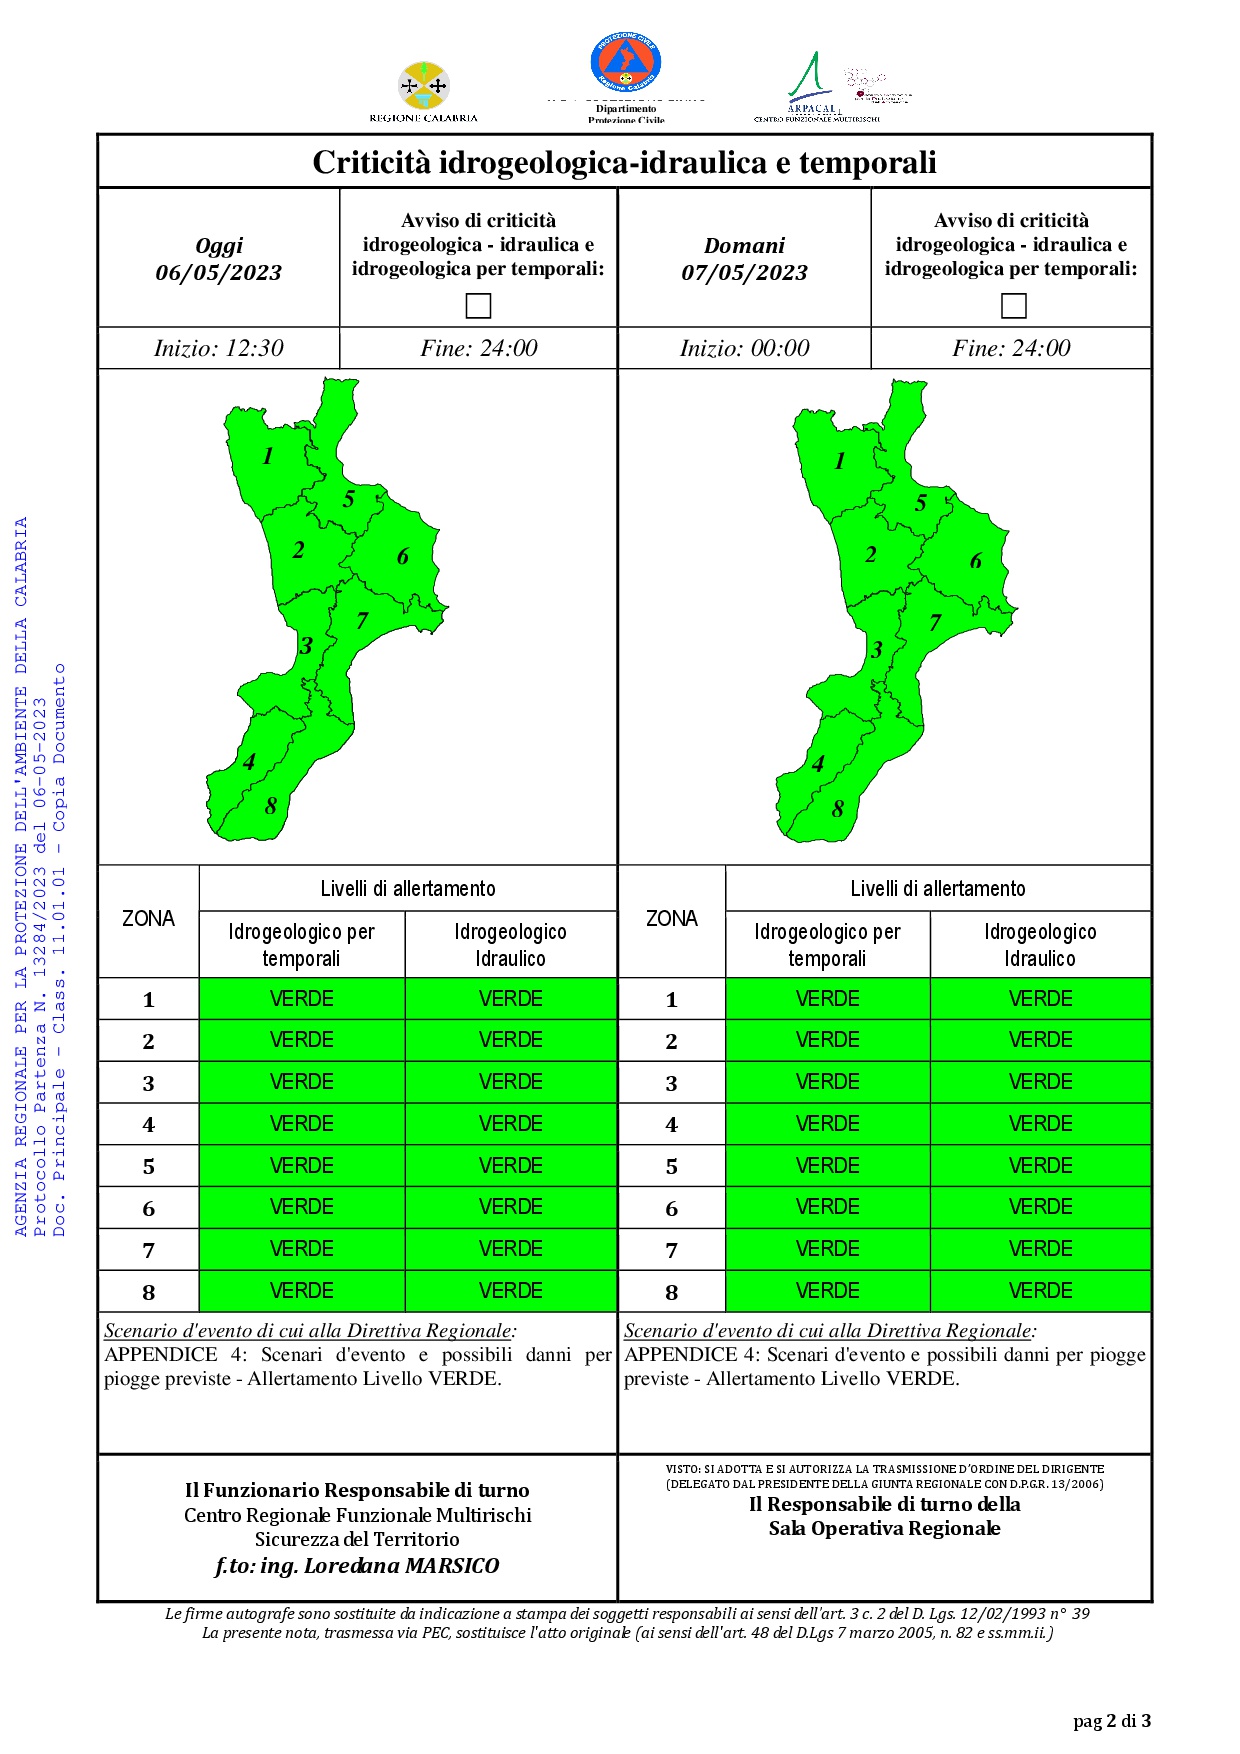 Criticità idrogeologica-idraulica e temporali in Calabria 06-05-2023